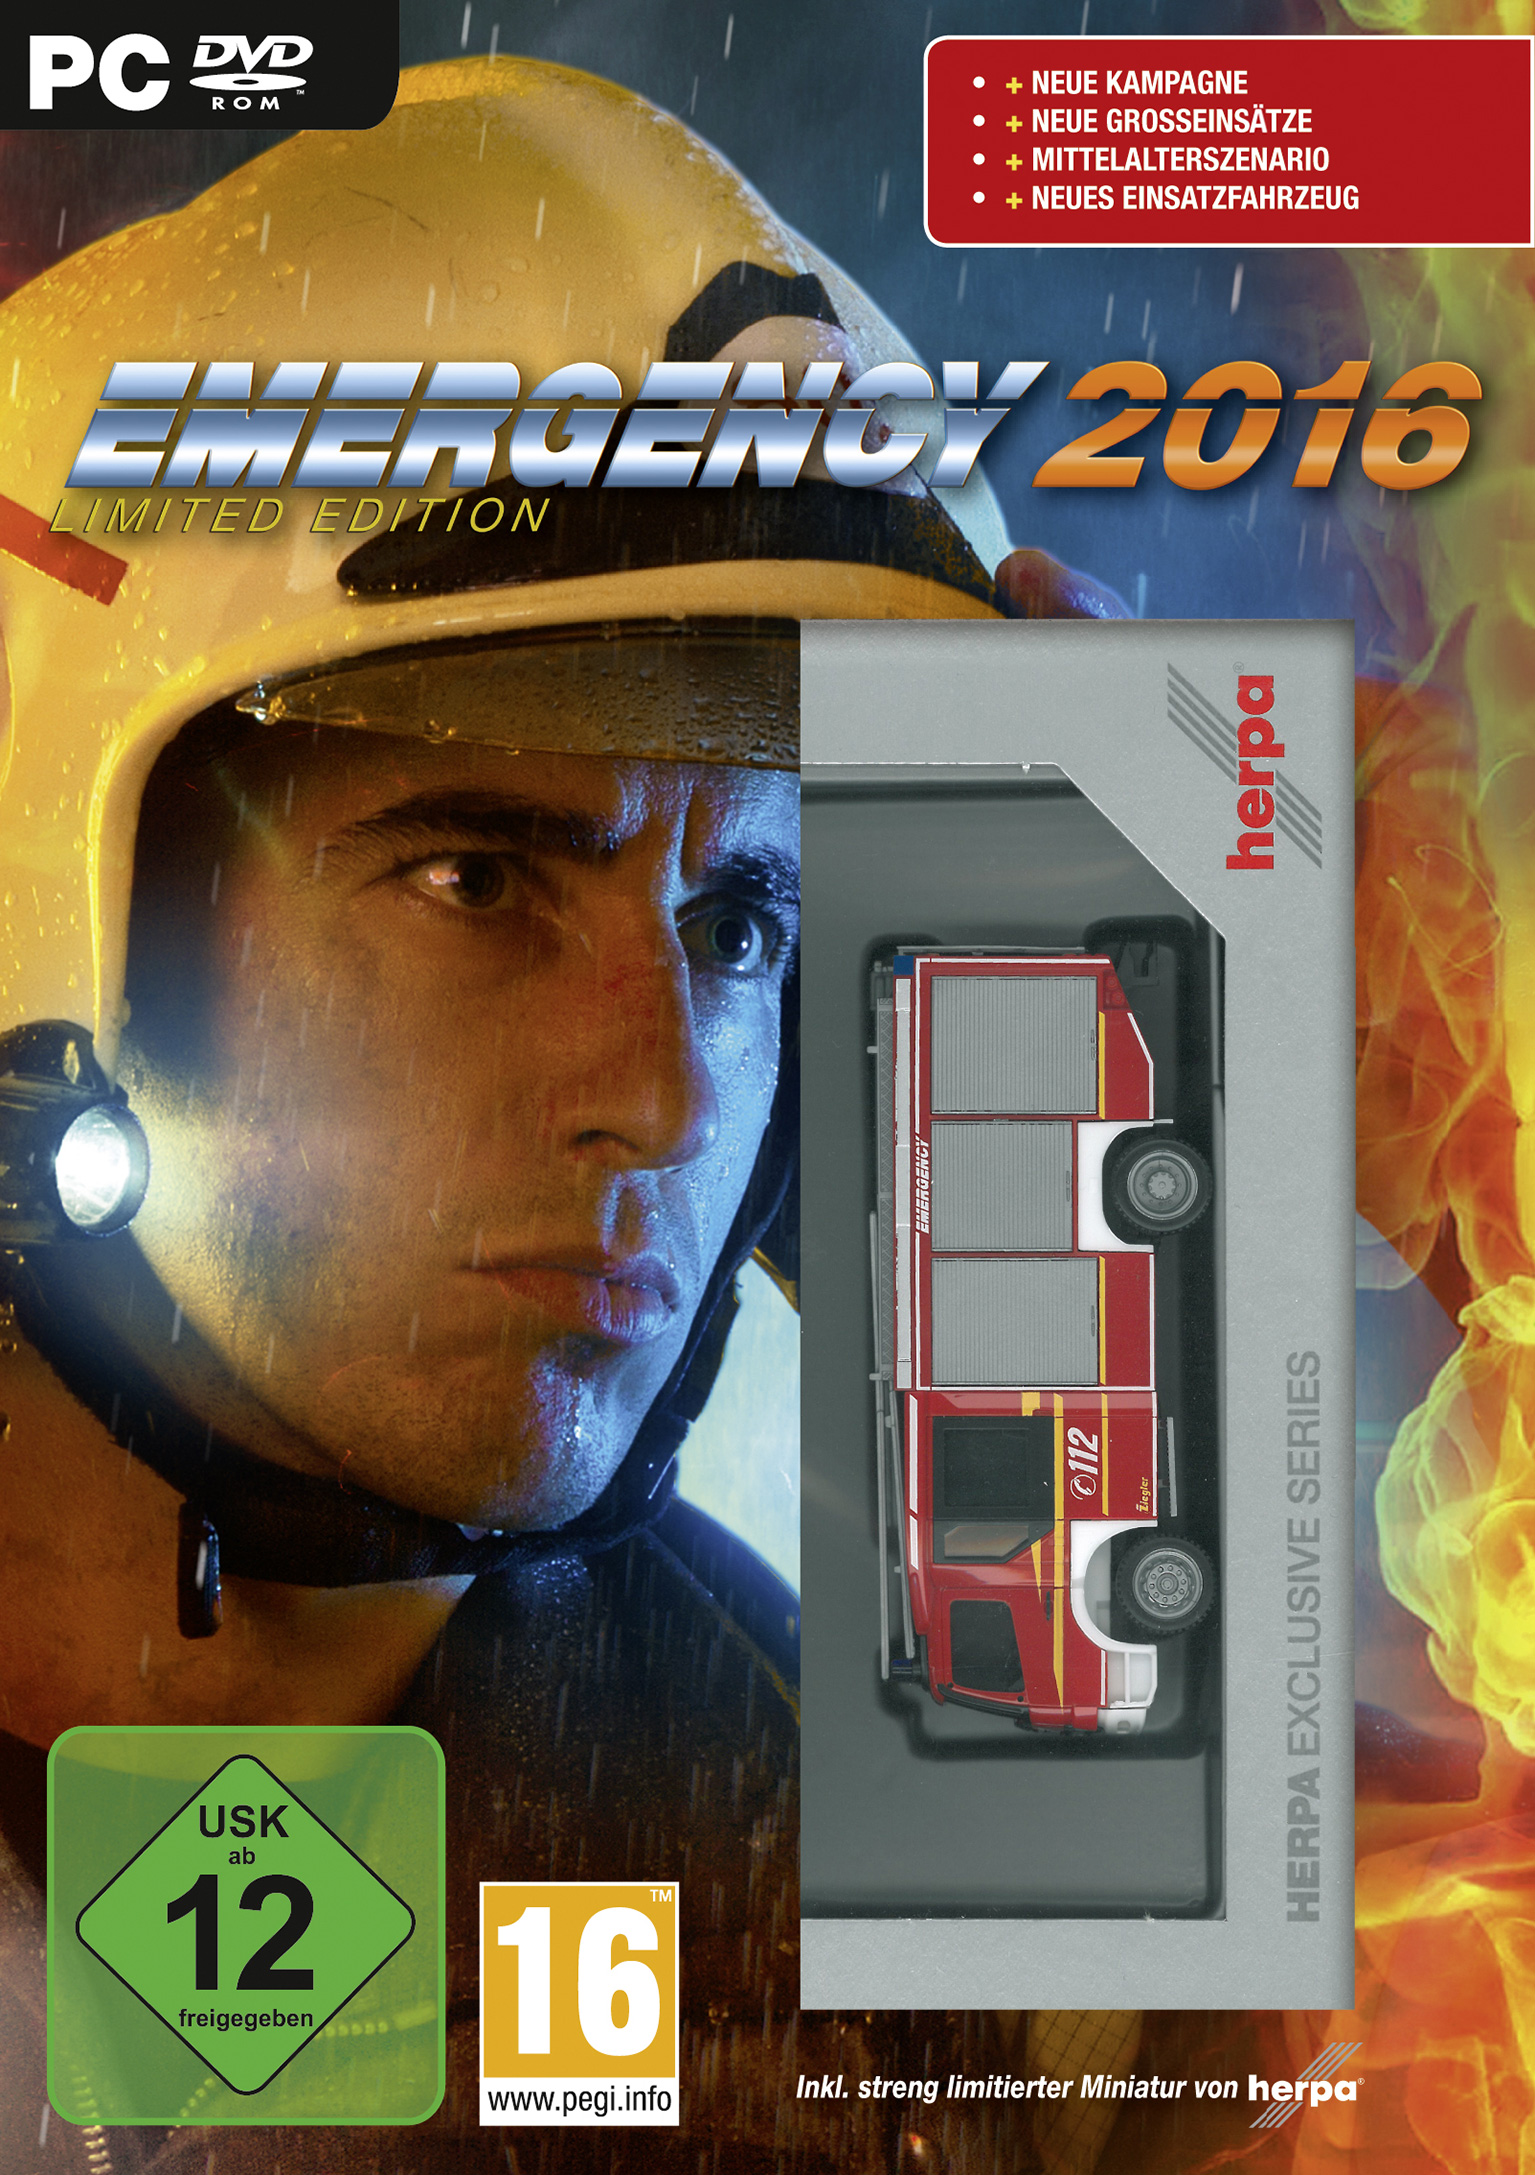 Emergency 2016 - pedn DVD obal 2